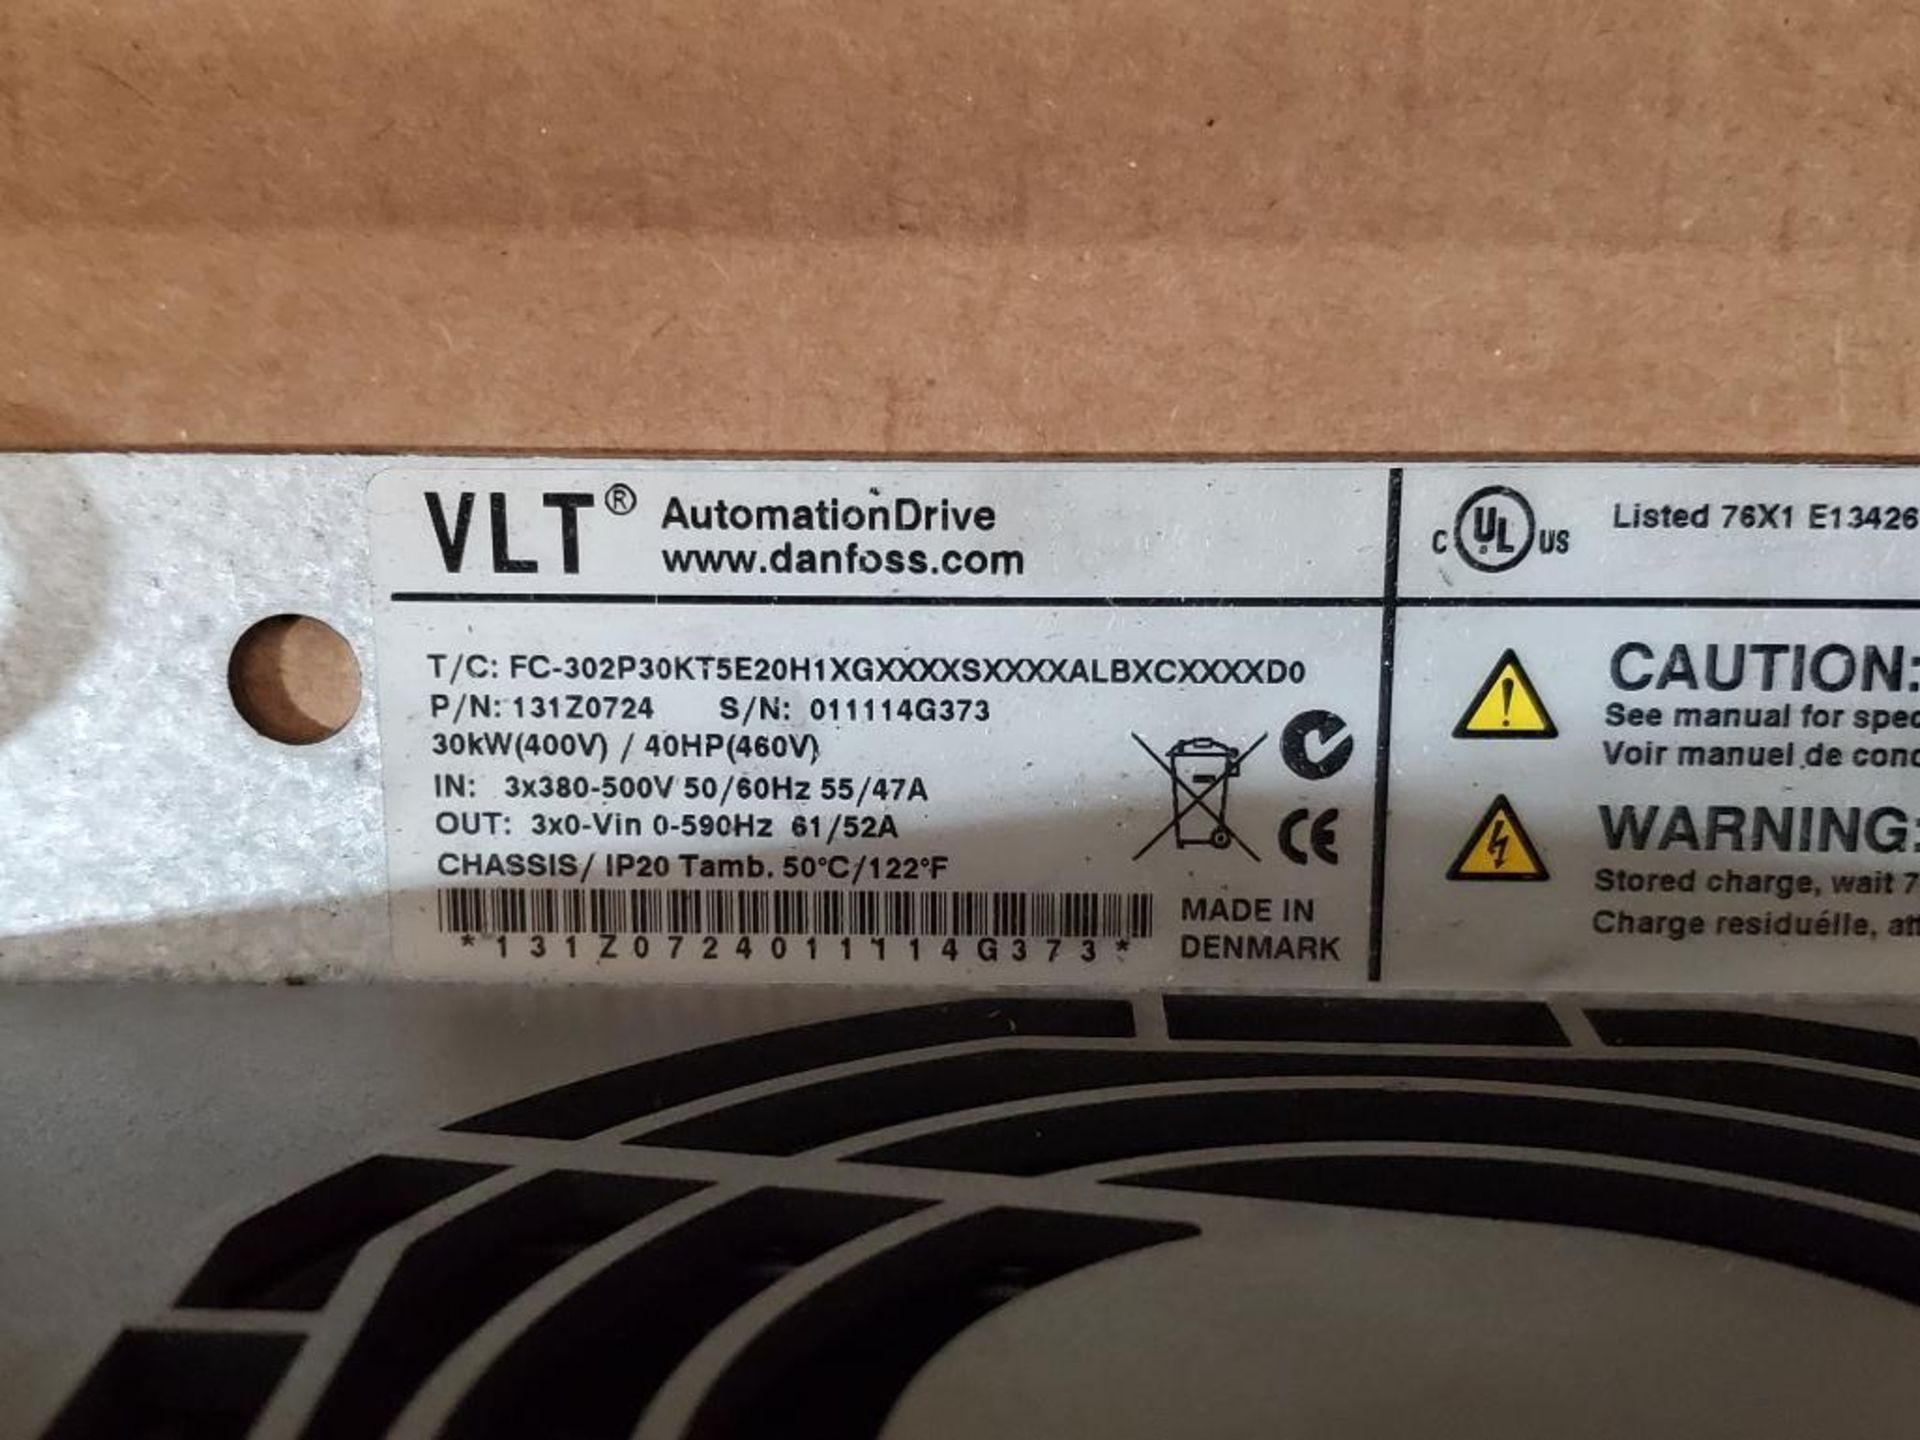 40HP Danfoss VLT AutomationDrive. P/N: 131Z0724. - Image 5 of 6